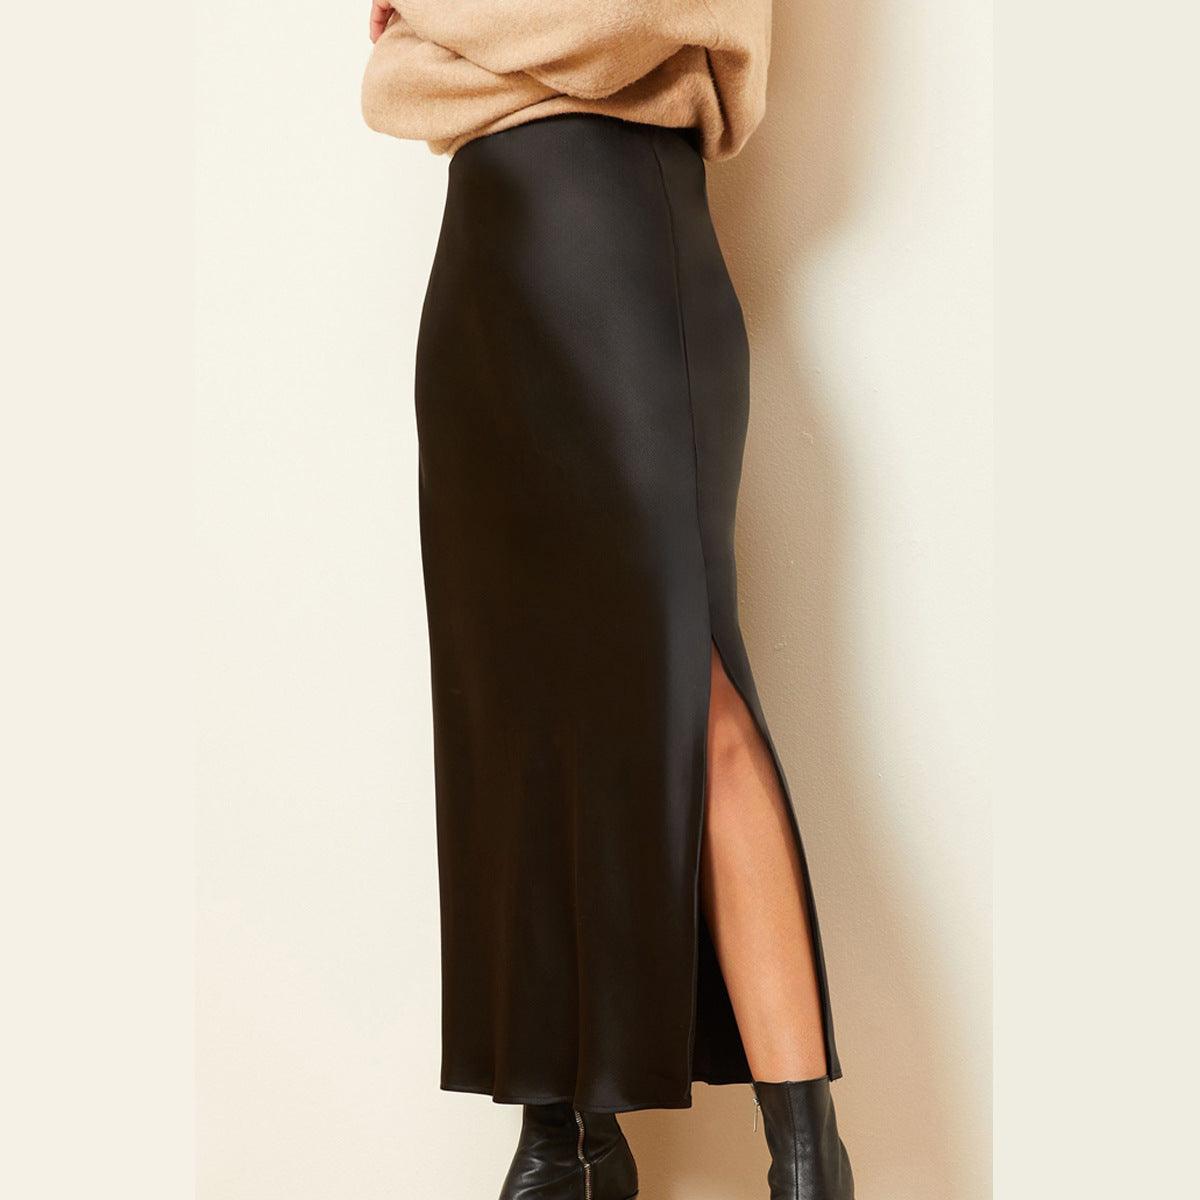 Elegant High-Waist Slit Skirt for Women – Chic Mid-Length with Oblique Cut - Glinyt